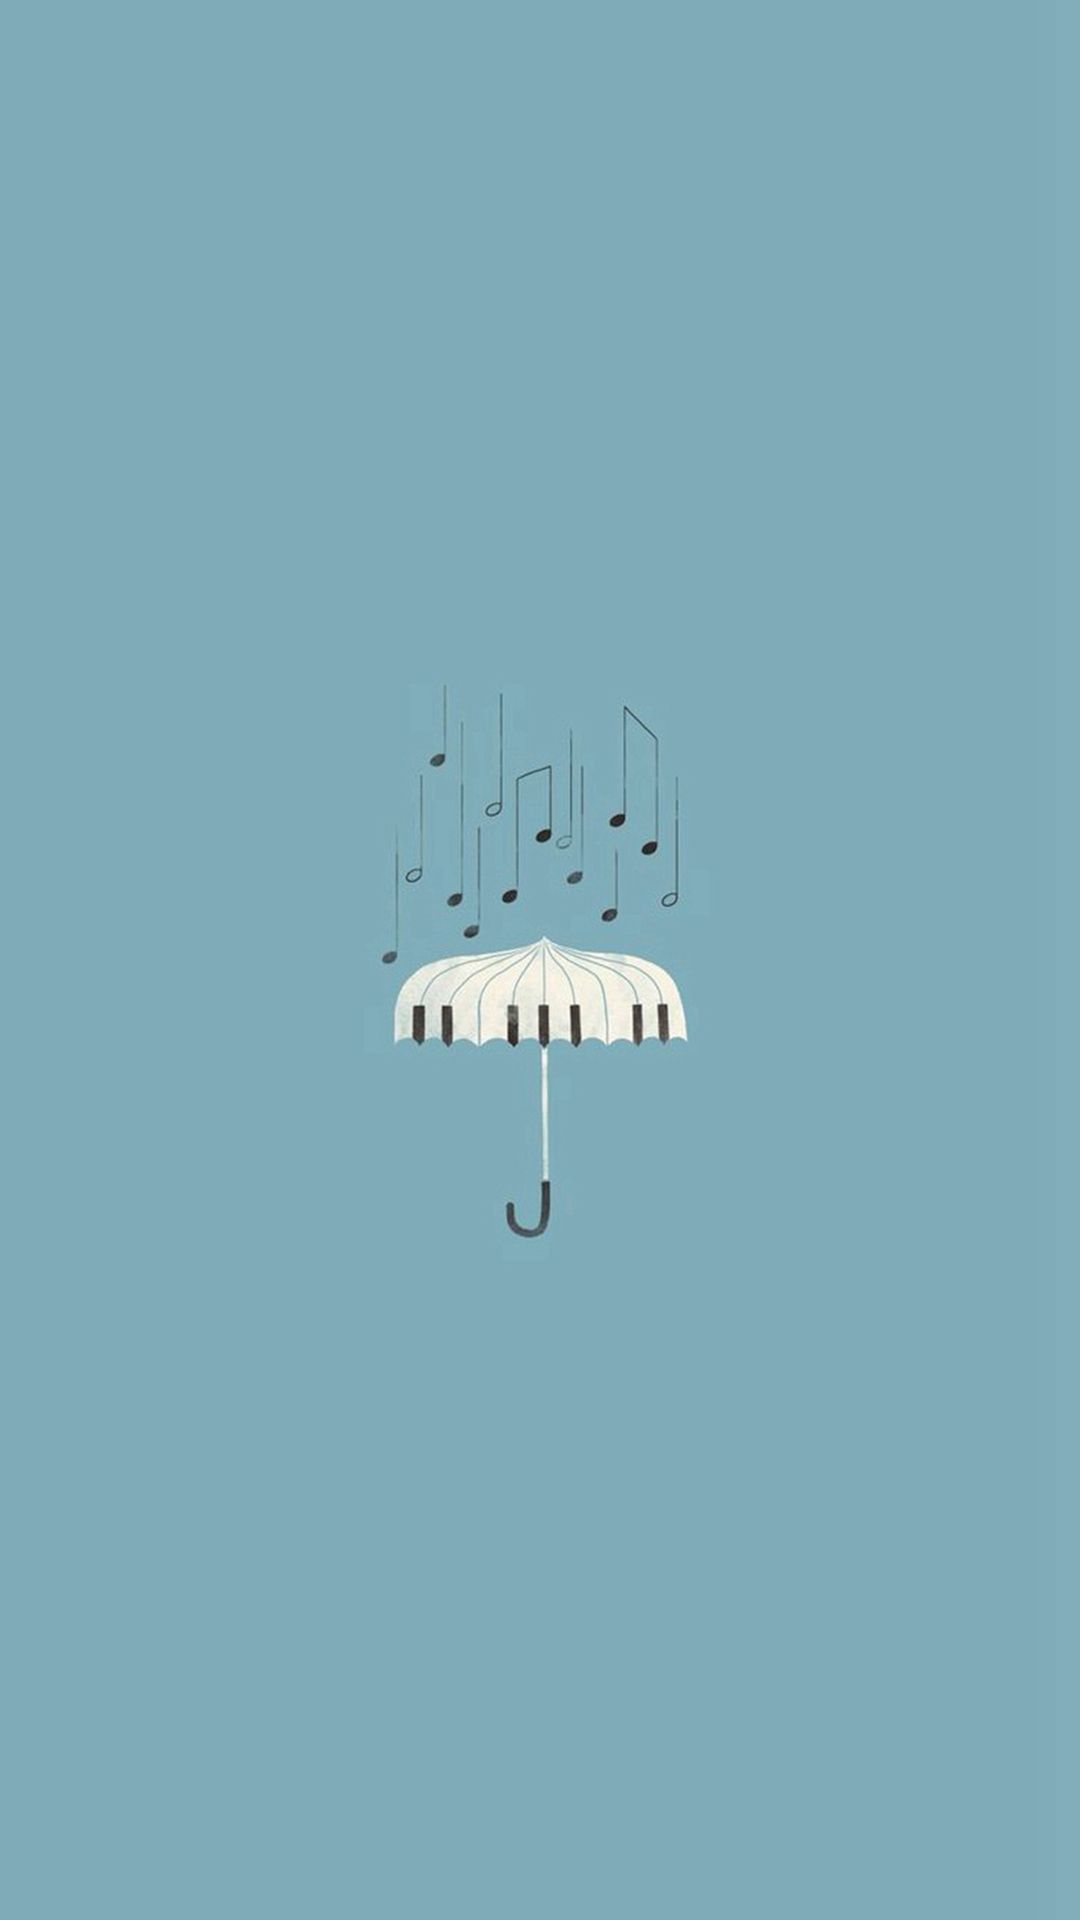 Piano Umbrella Illustration iPhone 8 Wallpaper Free Download